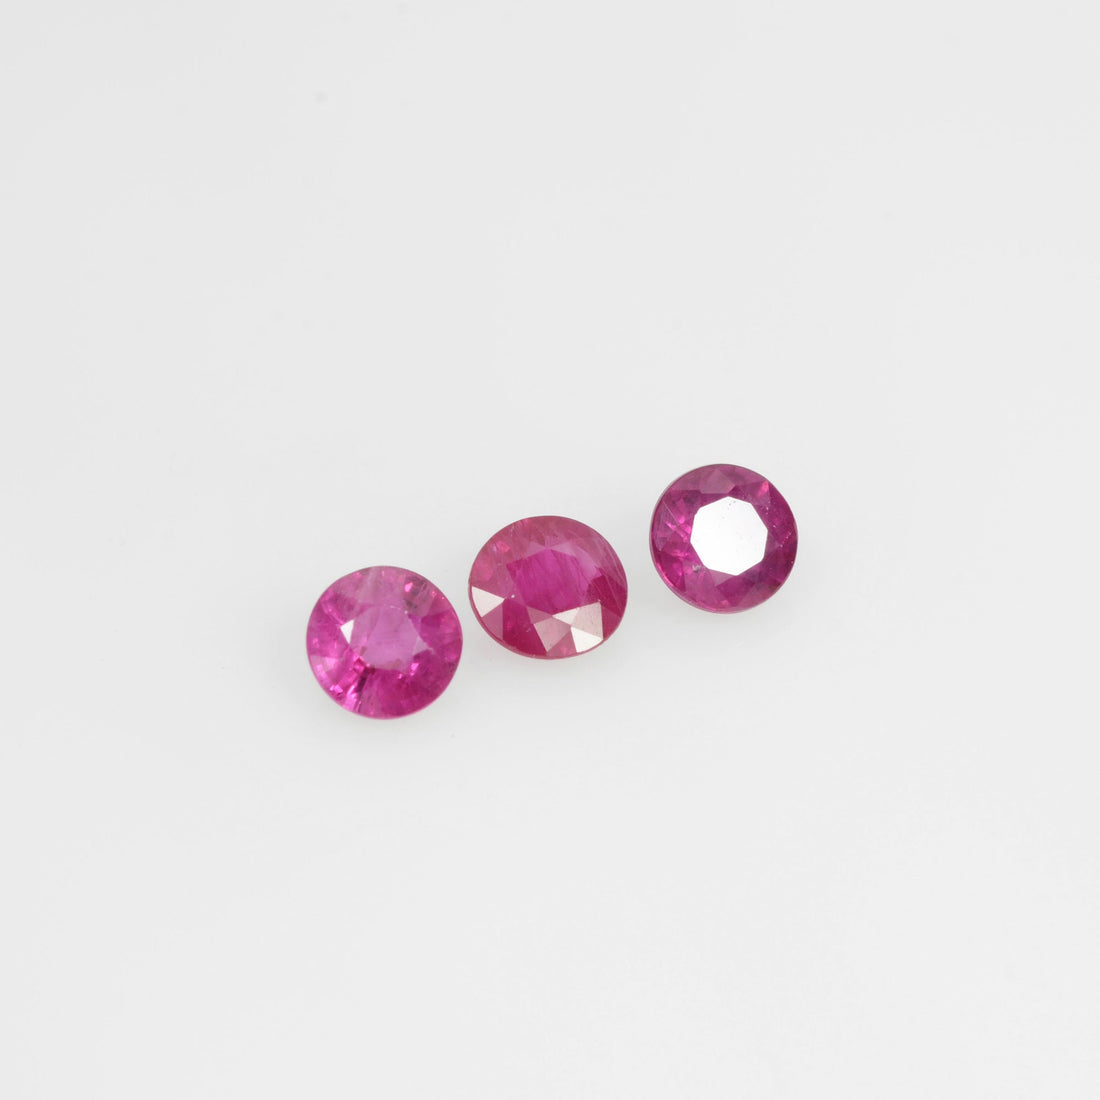 3.3-4.4 mm Natural Ruby Loose Gemstone Round Cut